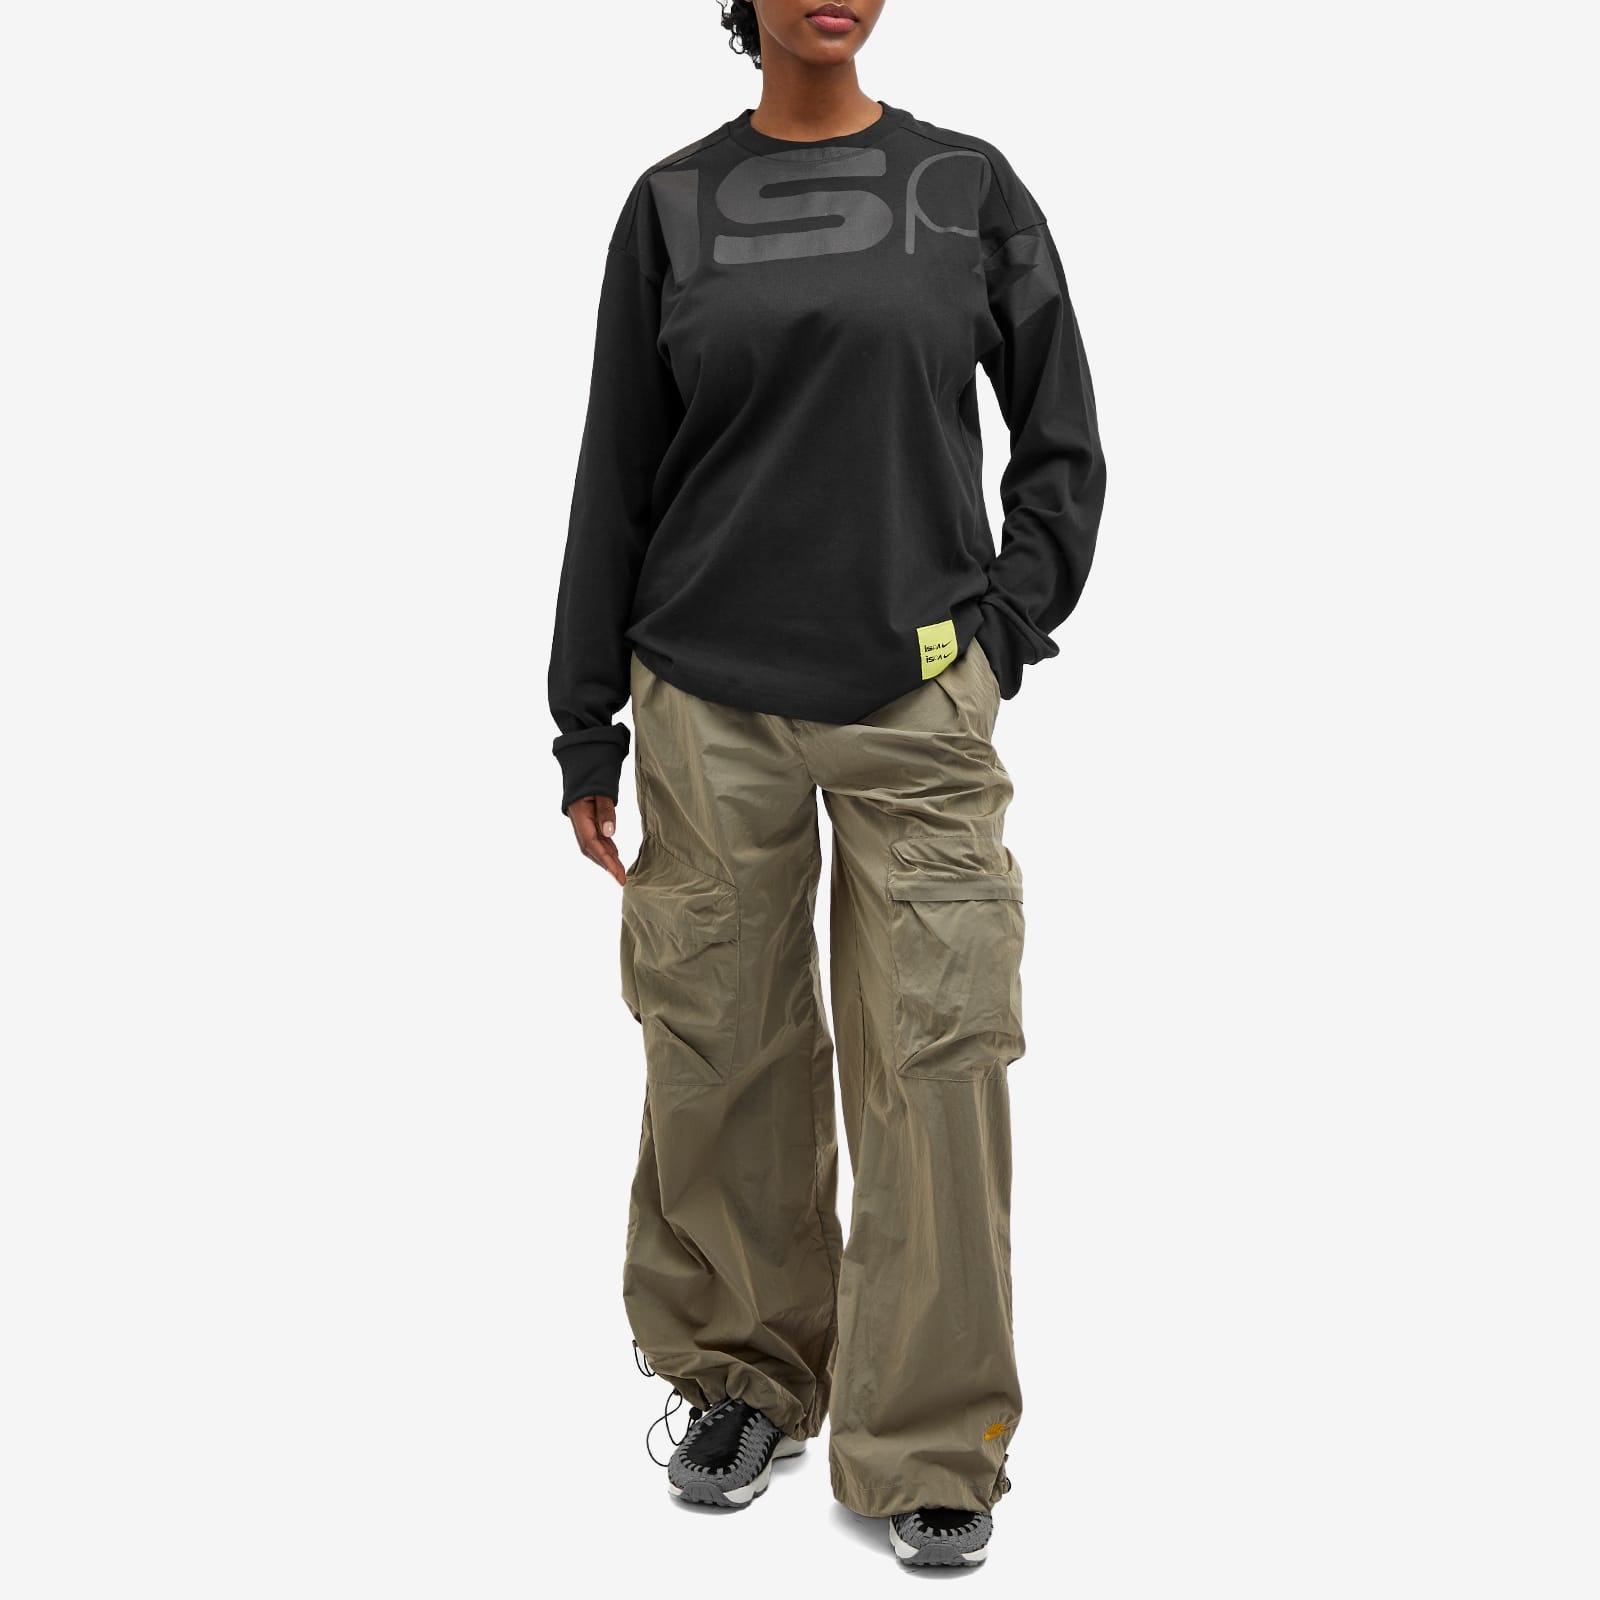 Nike ISPA Long Sleeve T-shirt - 4